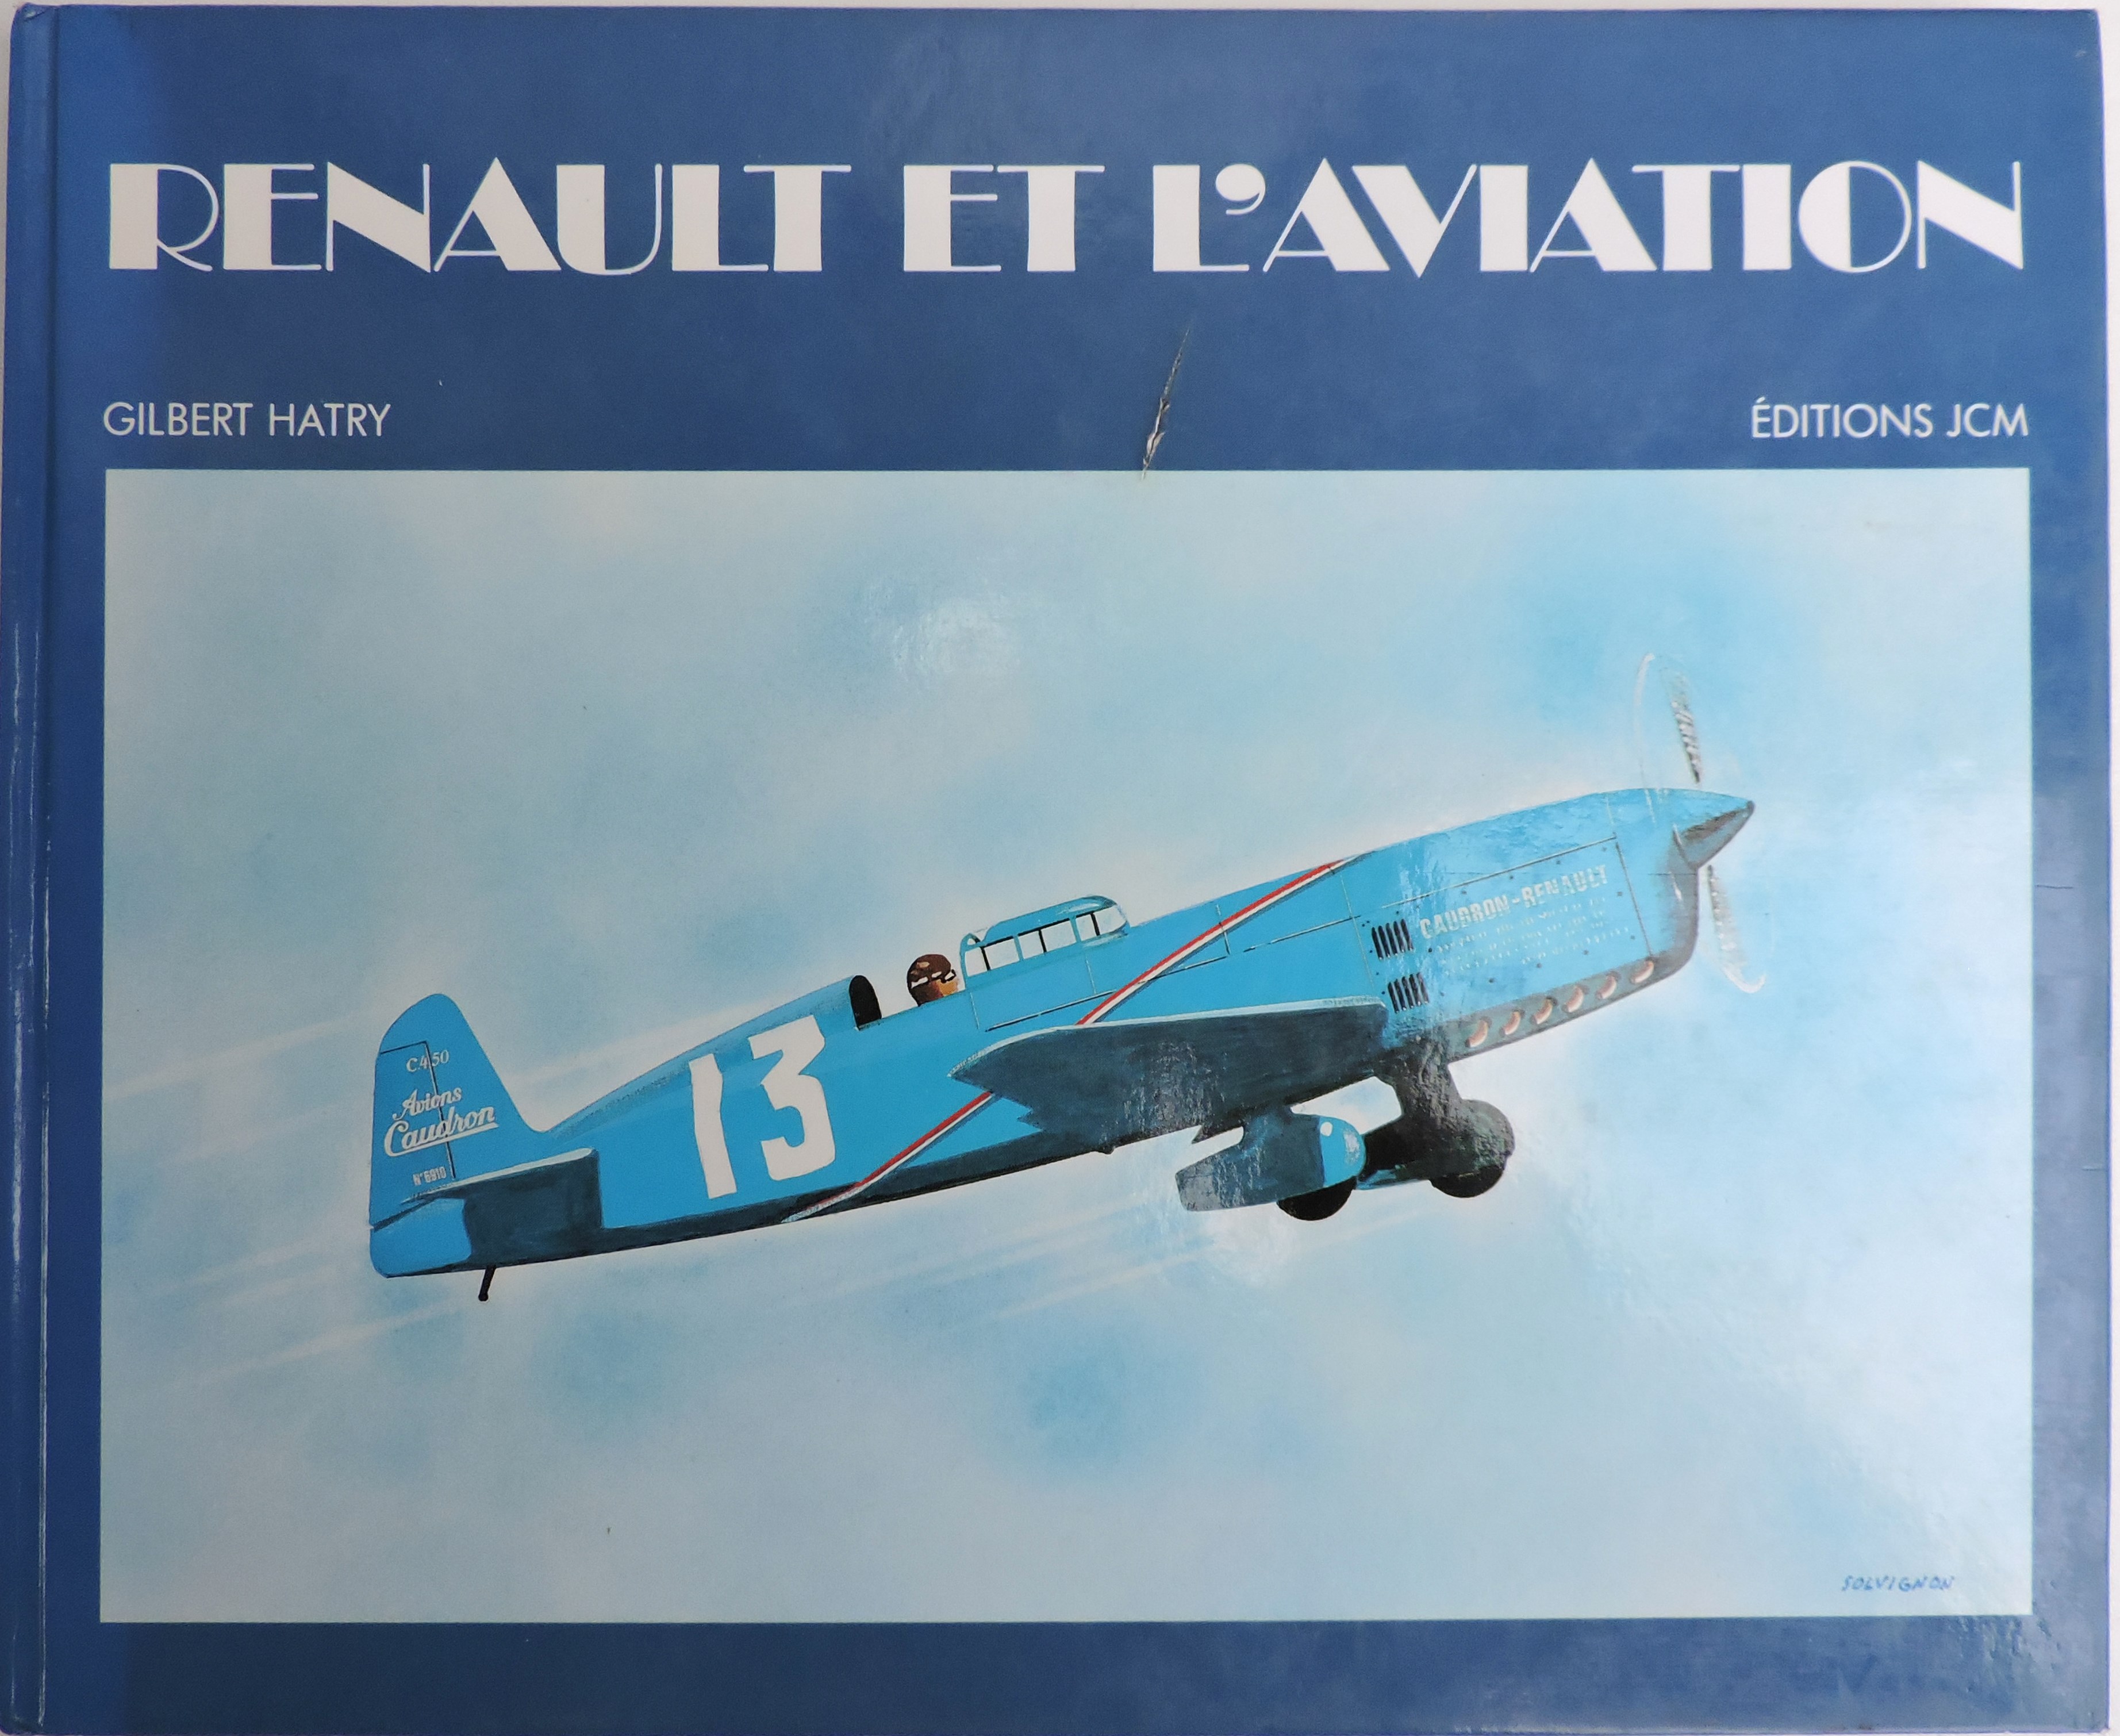 Renault et l'aviation Gilbert Hatry Editions JCM